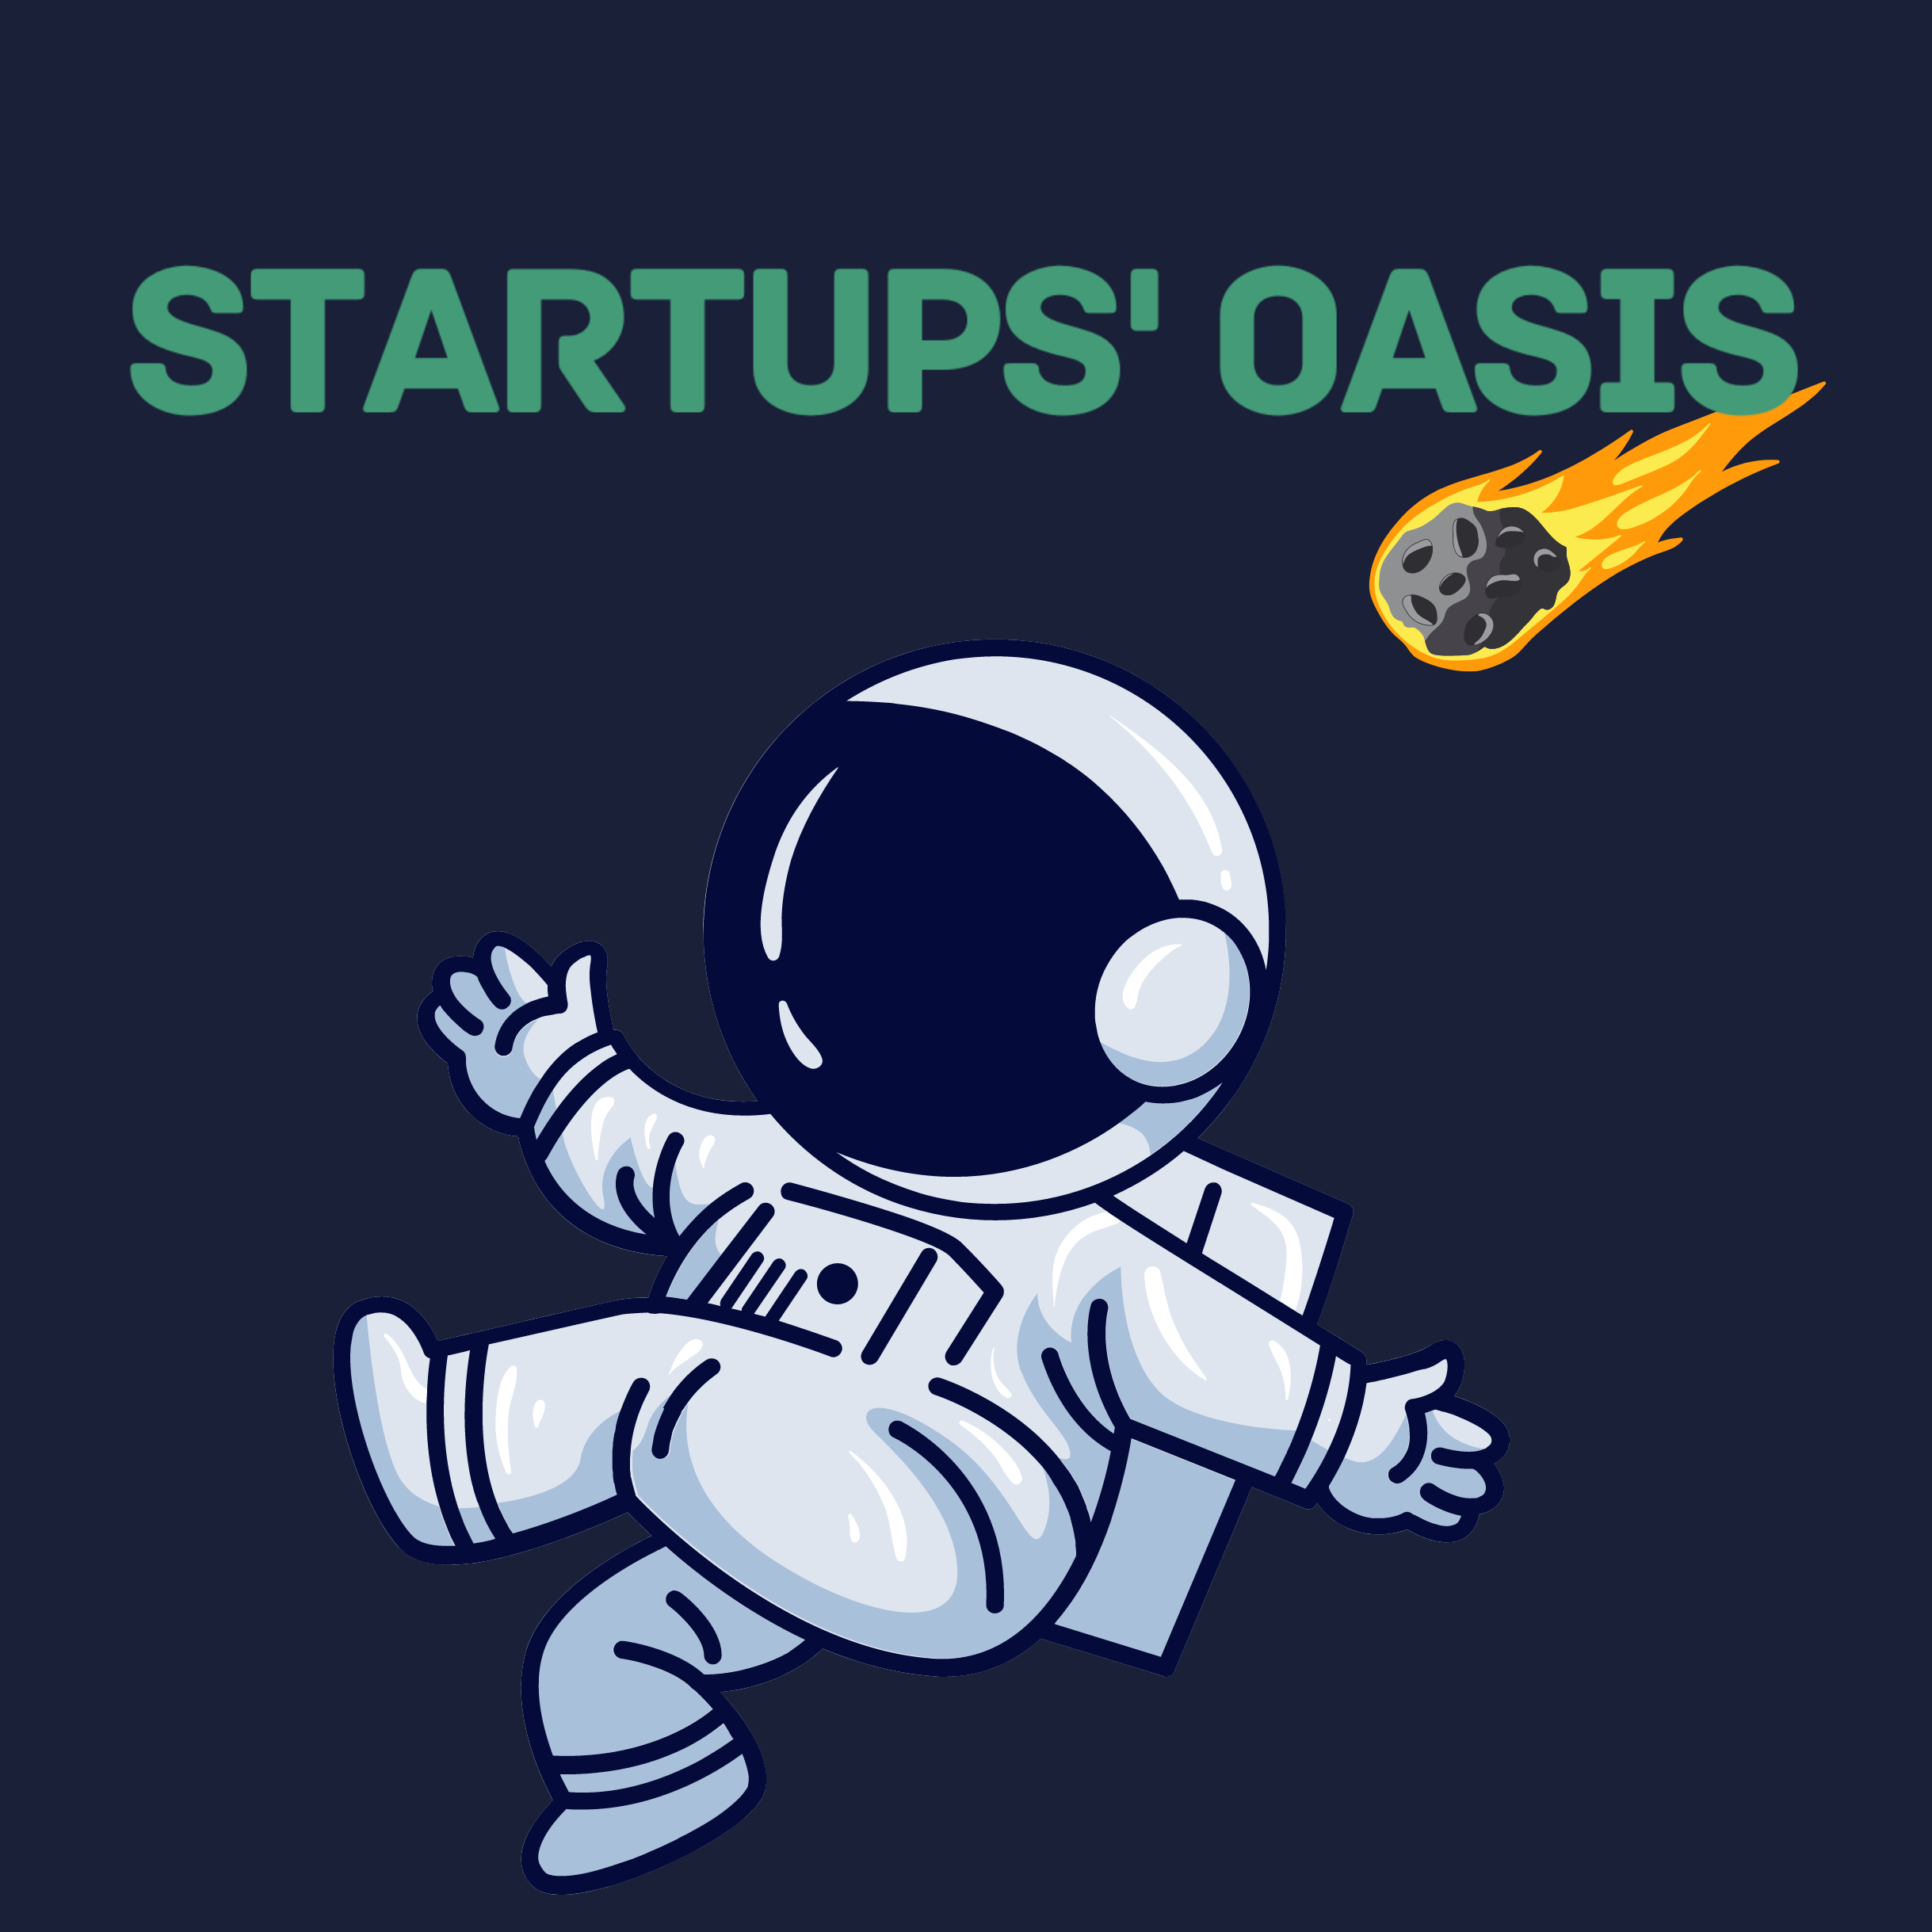 (c) Startupsoasis.com